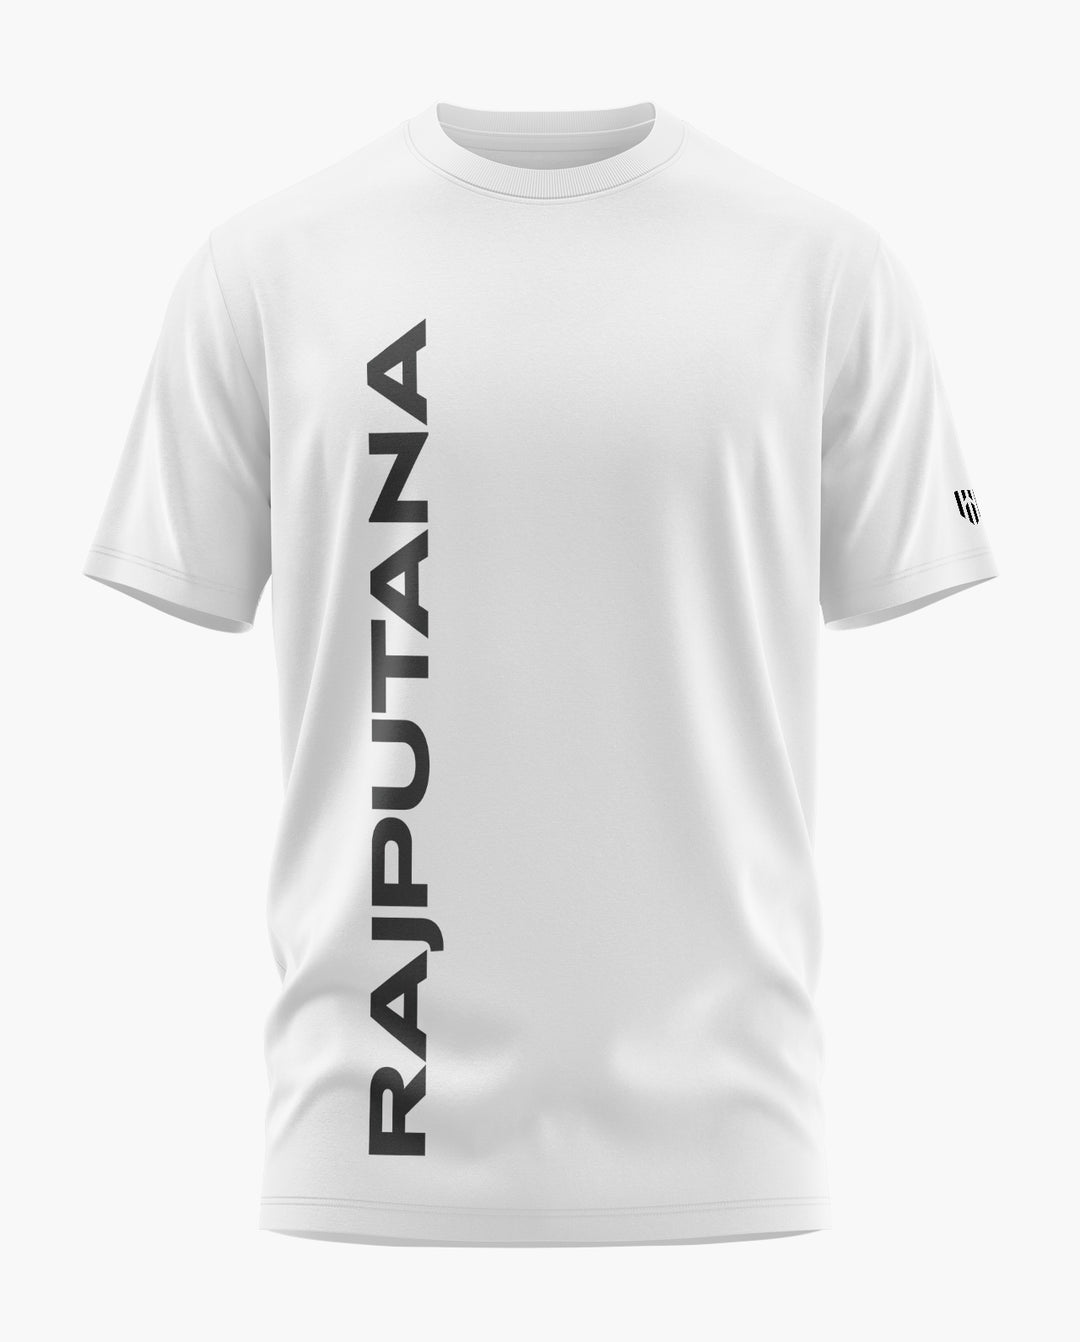 RAJPUTANA REGT T-Shirt